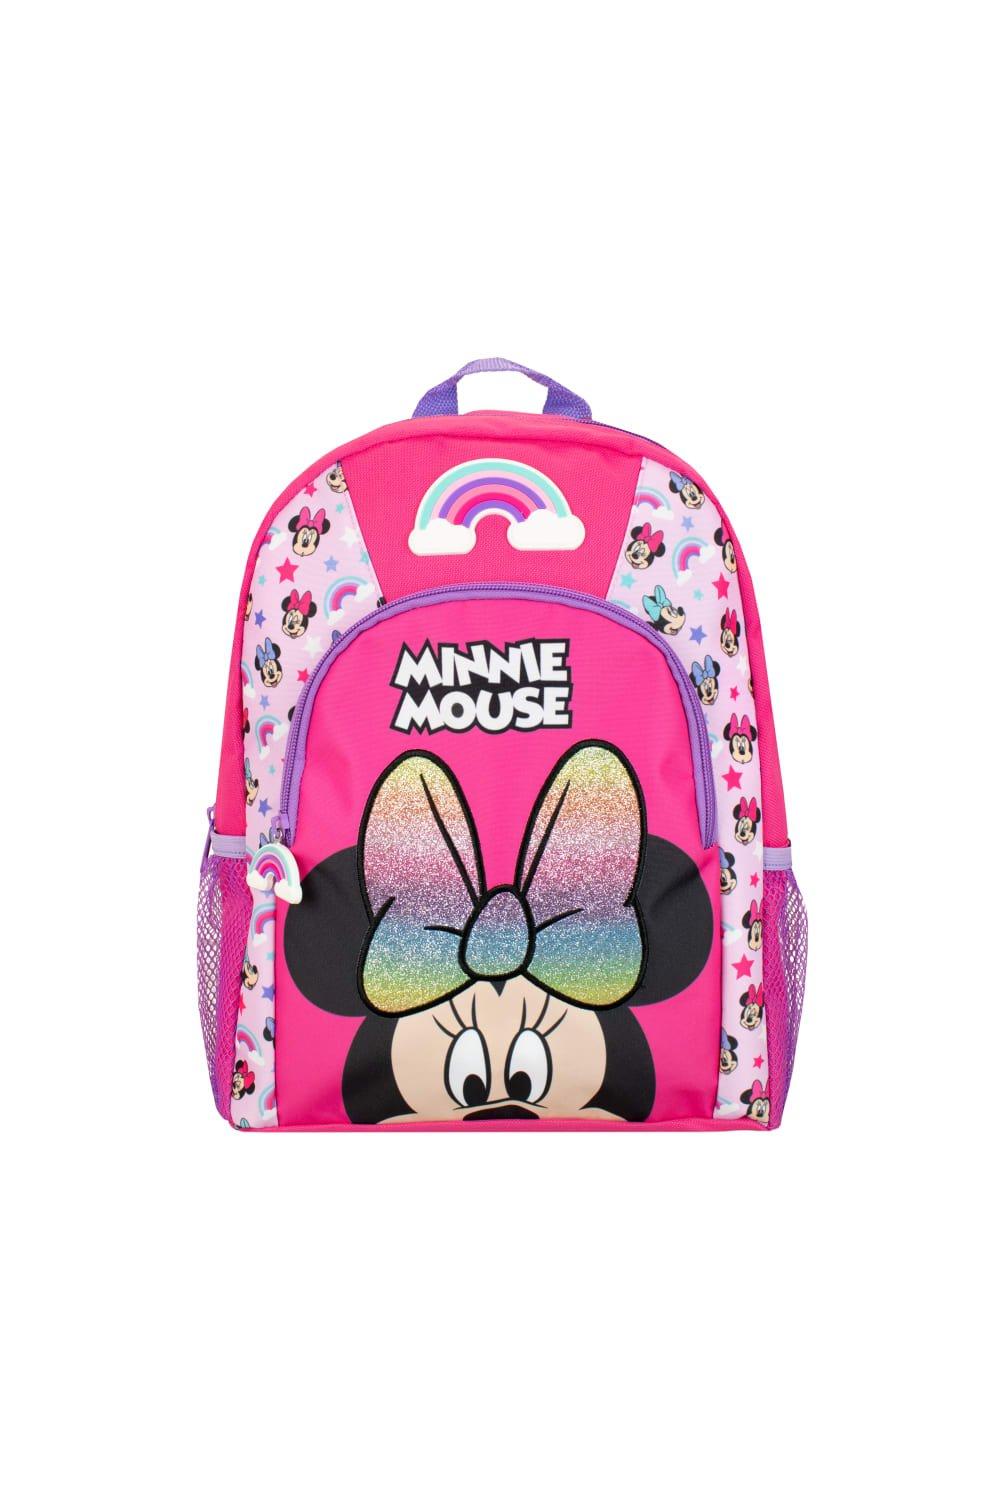 Детский рюкзак с Минни Маус Disney, розовый рюкзак минни маус mickey mouse голубой 1